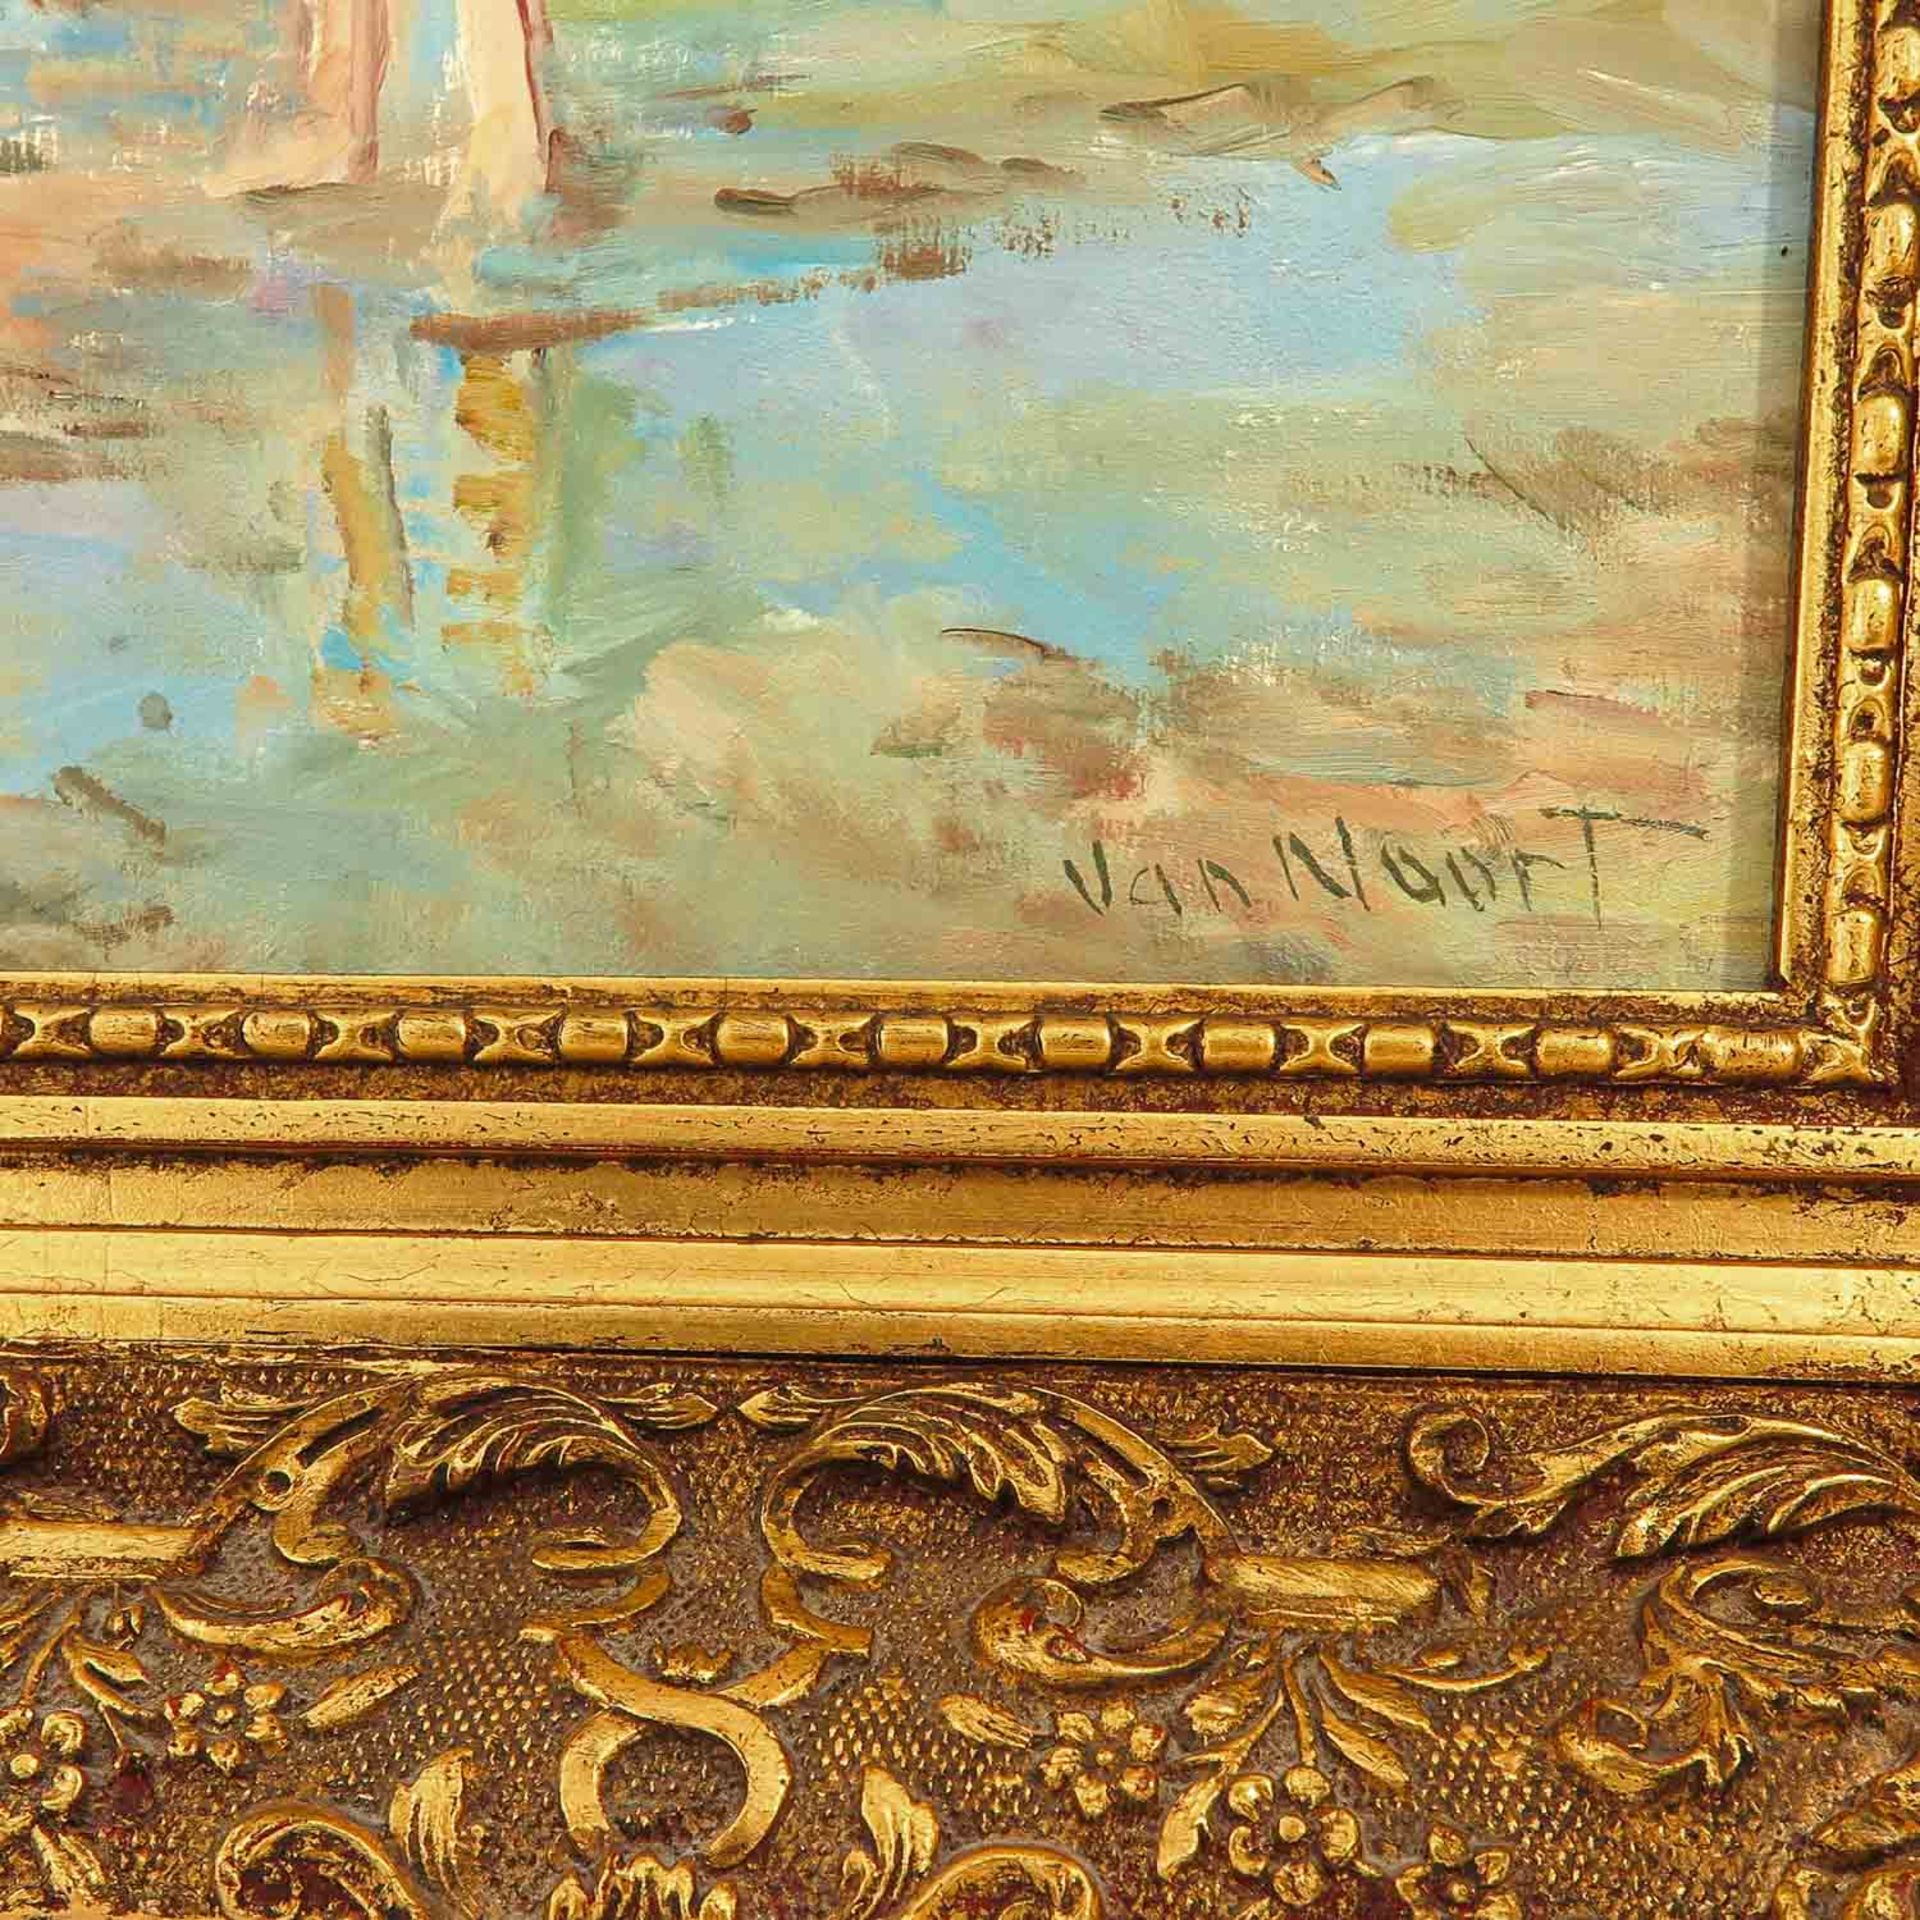 An Oil on Panel Signed van Noort - Image 3 of 6